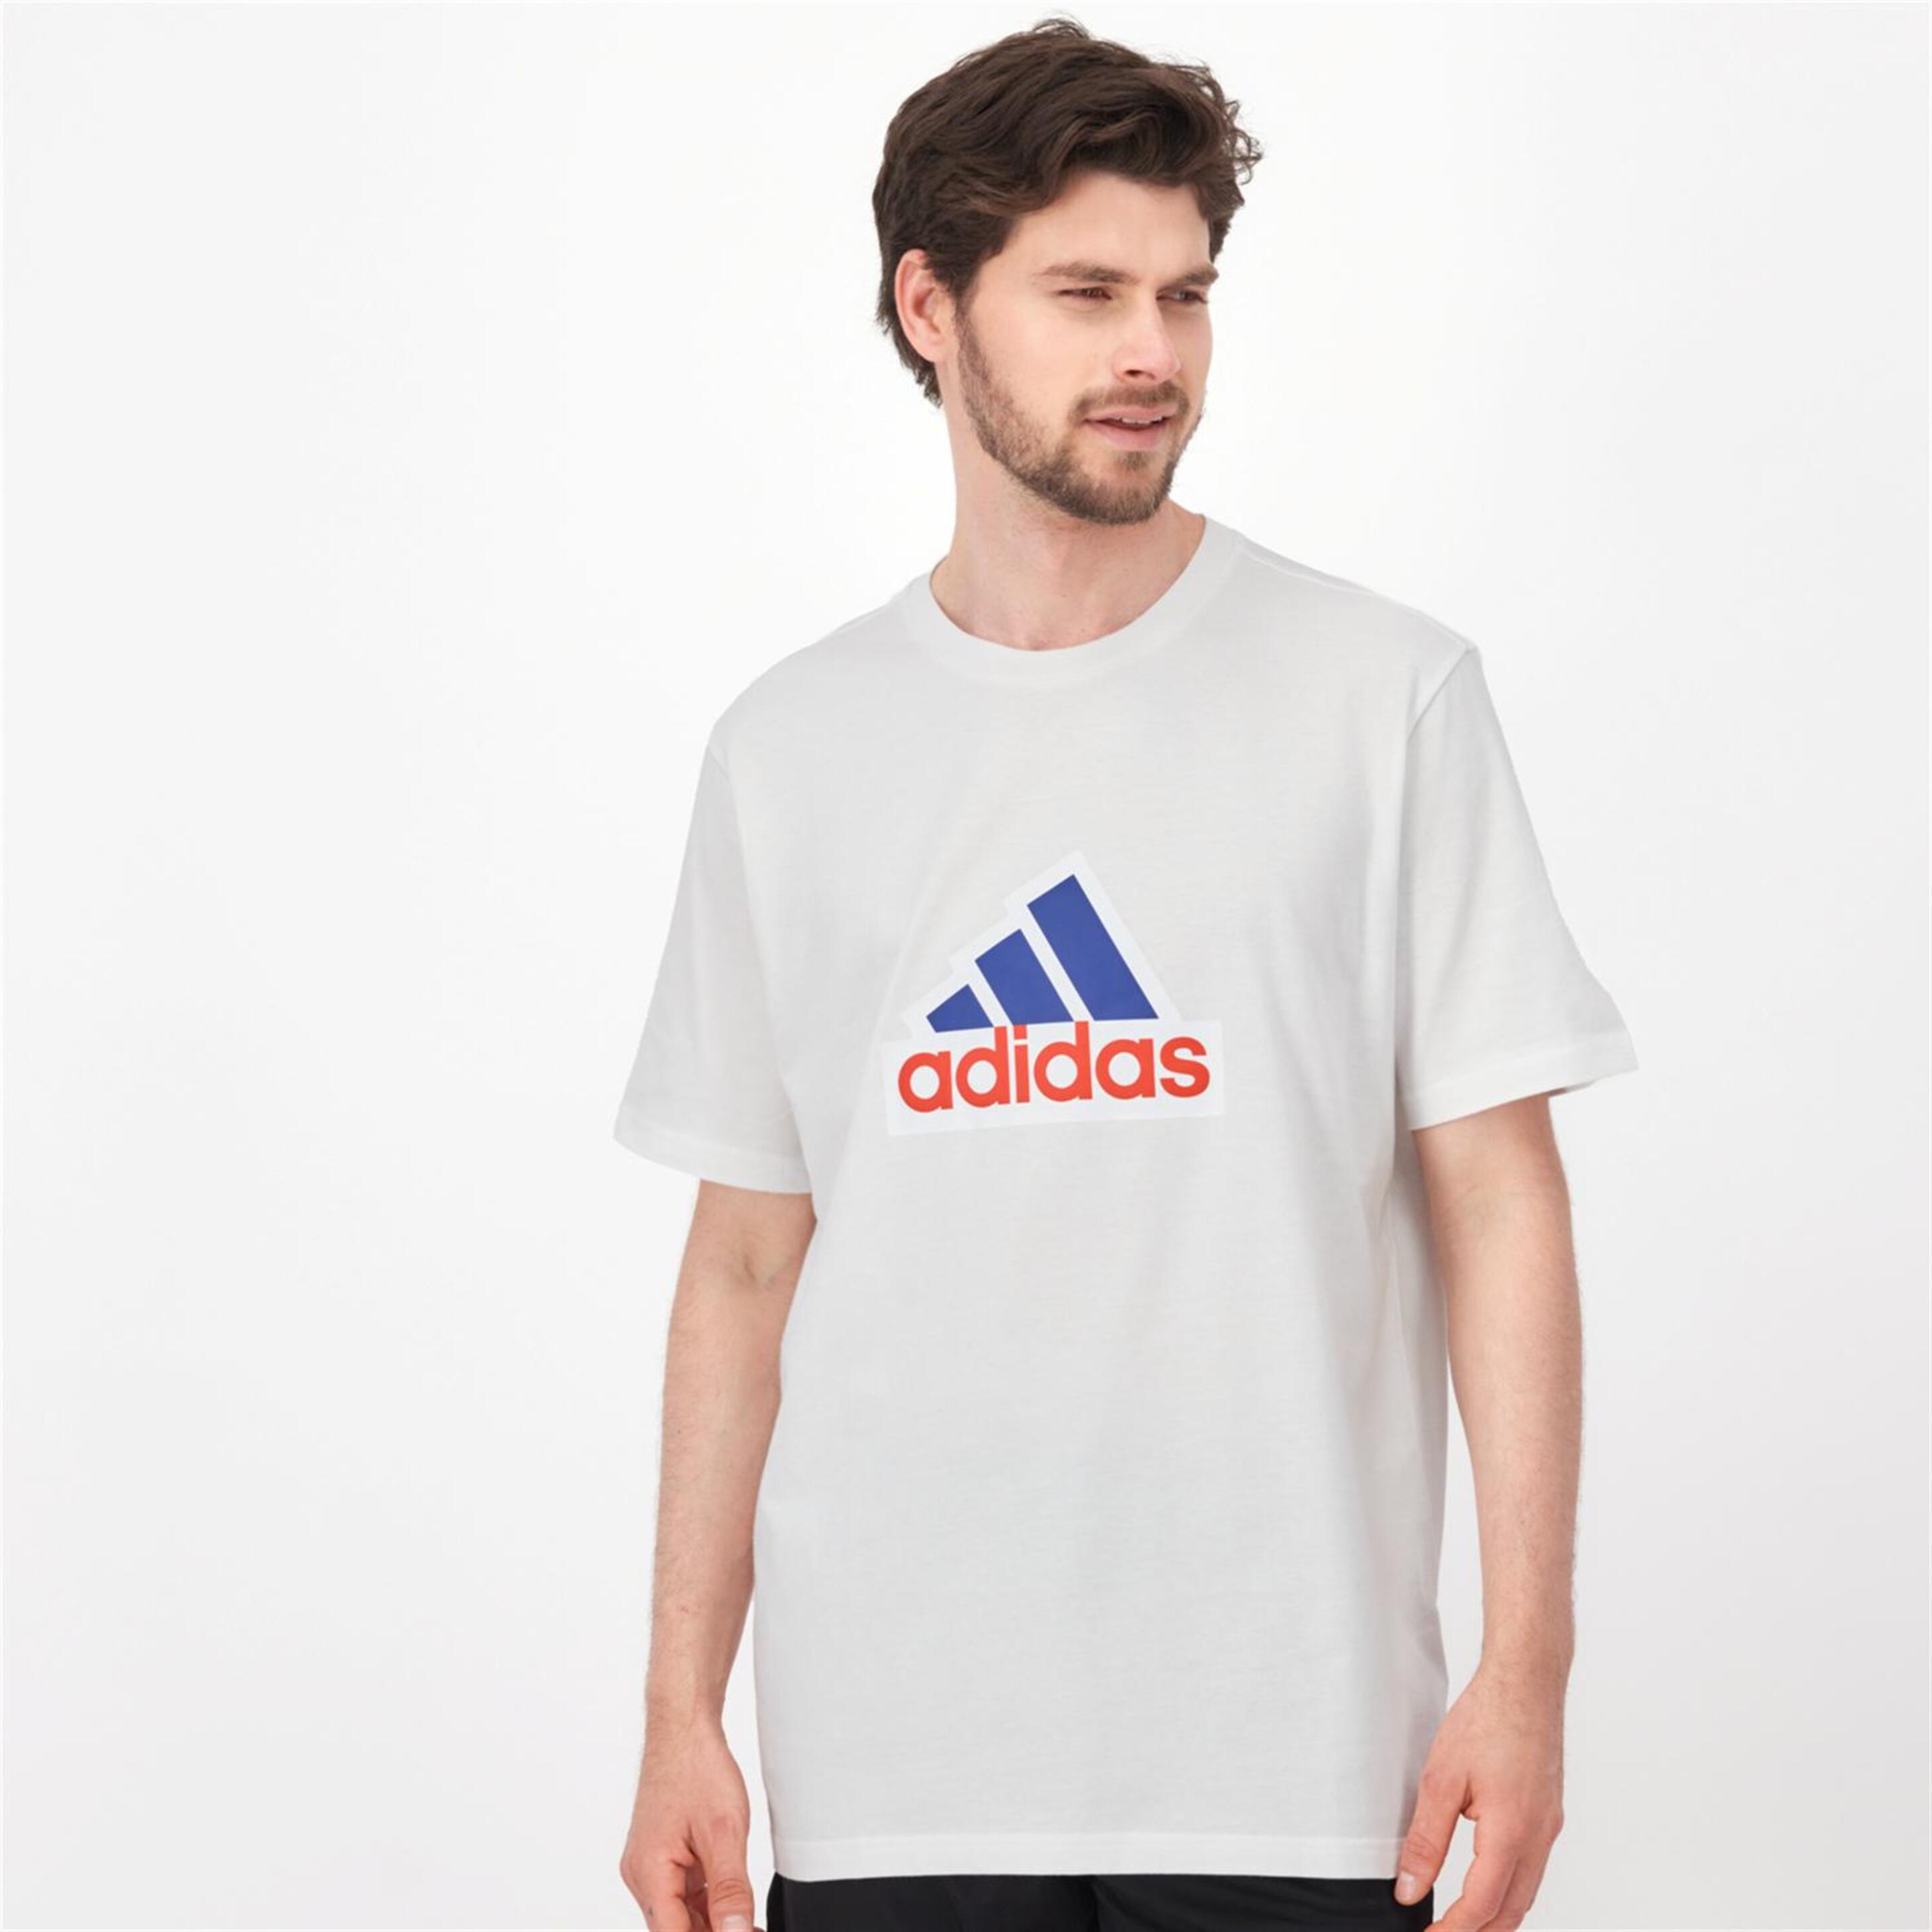 adidas Oly - blanco - Camiseta Hombre